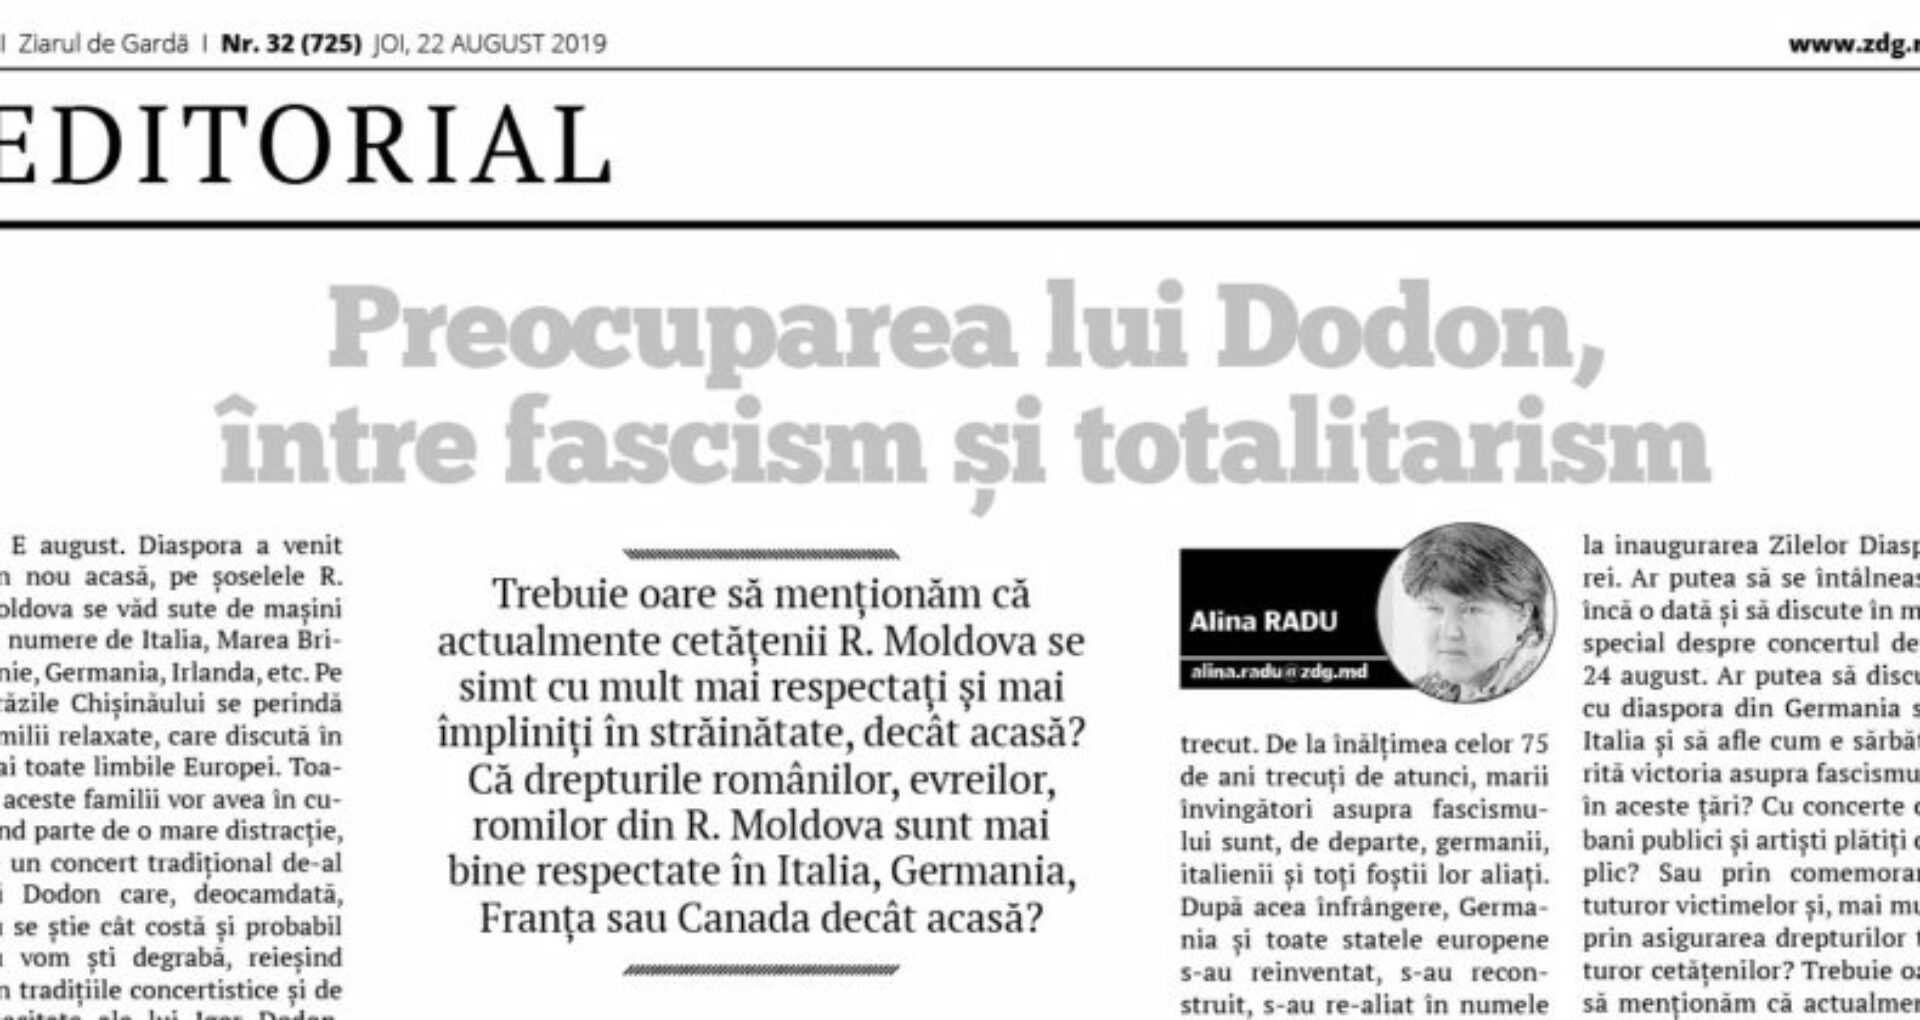 Dodon’s concern, between fascism and totalitarianism